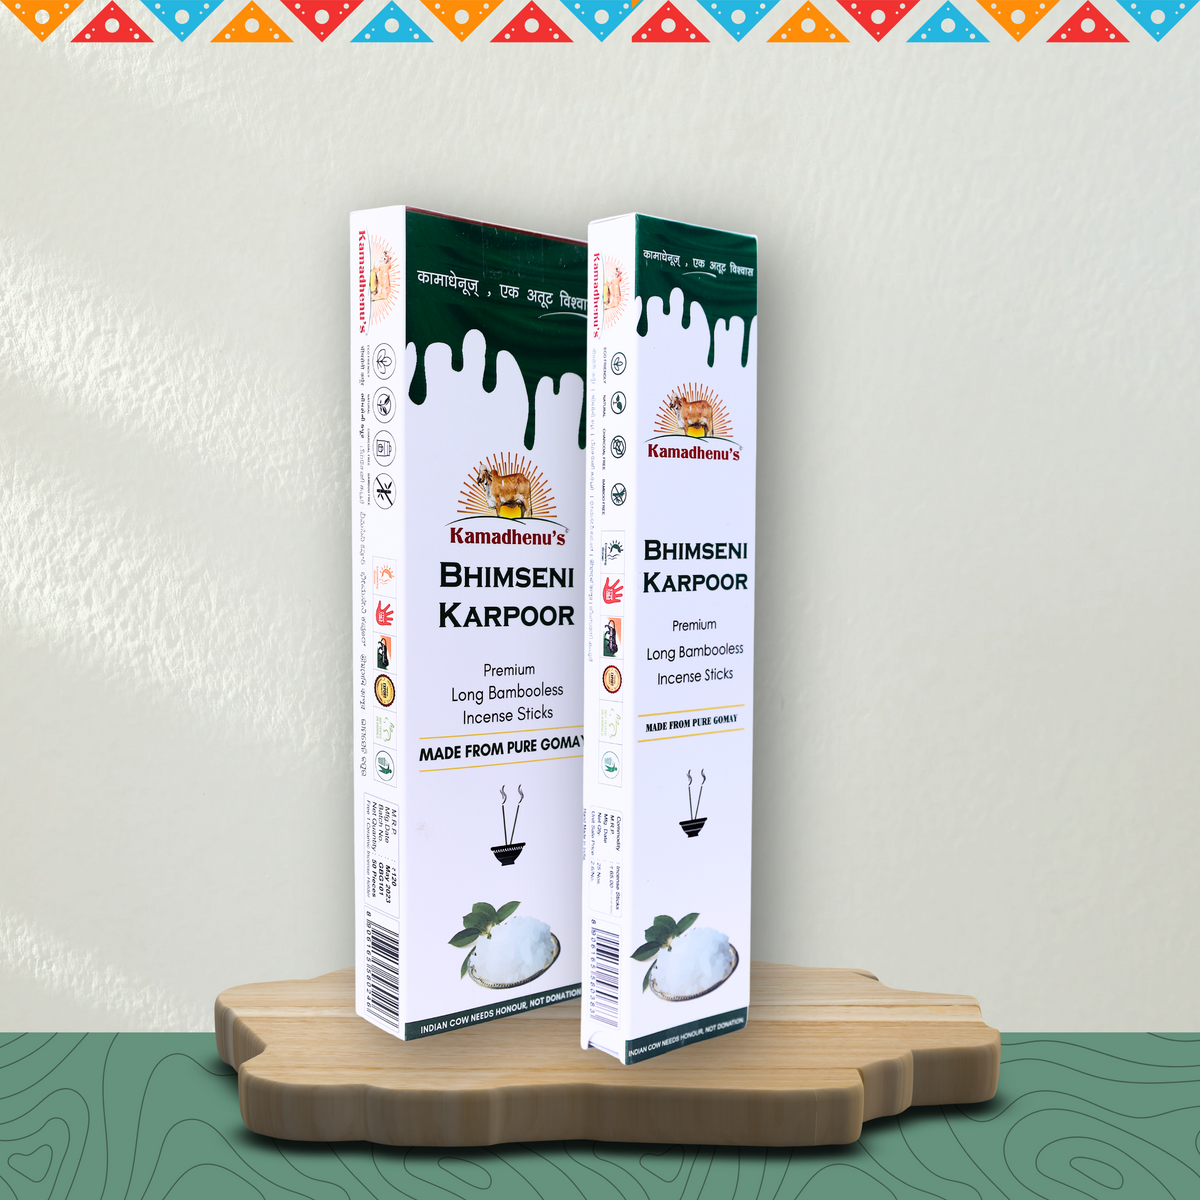 Kamadhenu's Bhimseni kapoor Premium Long Bambooless Incense Sticks